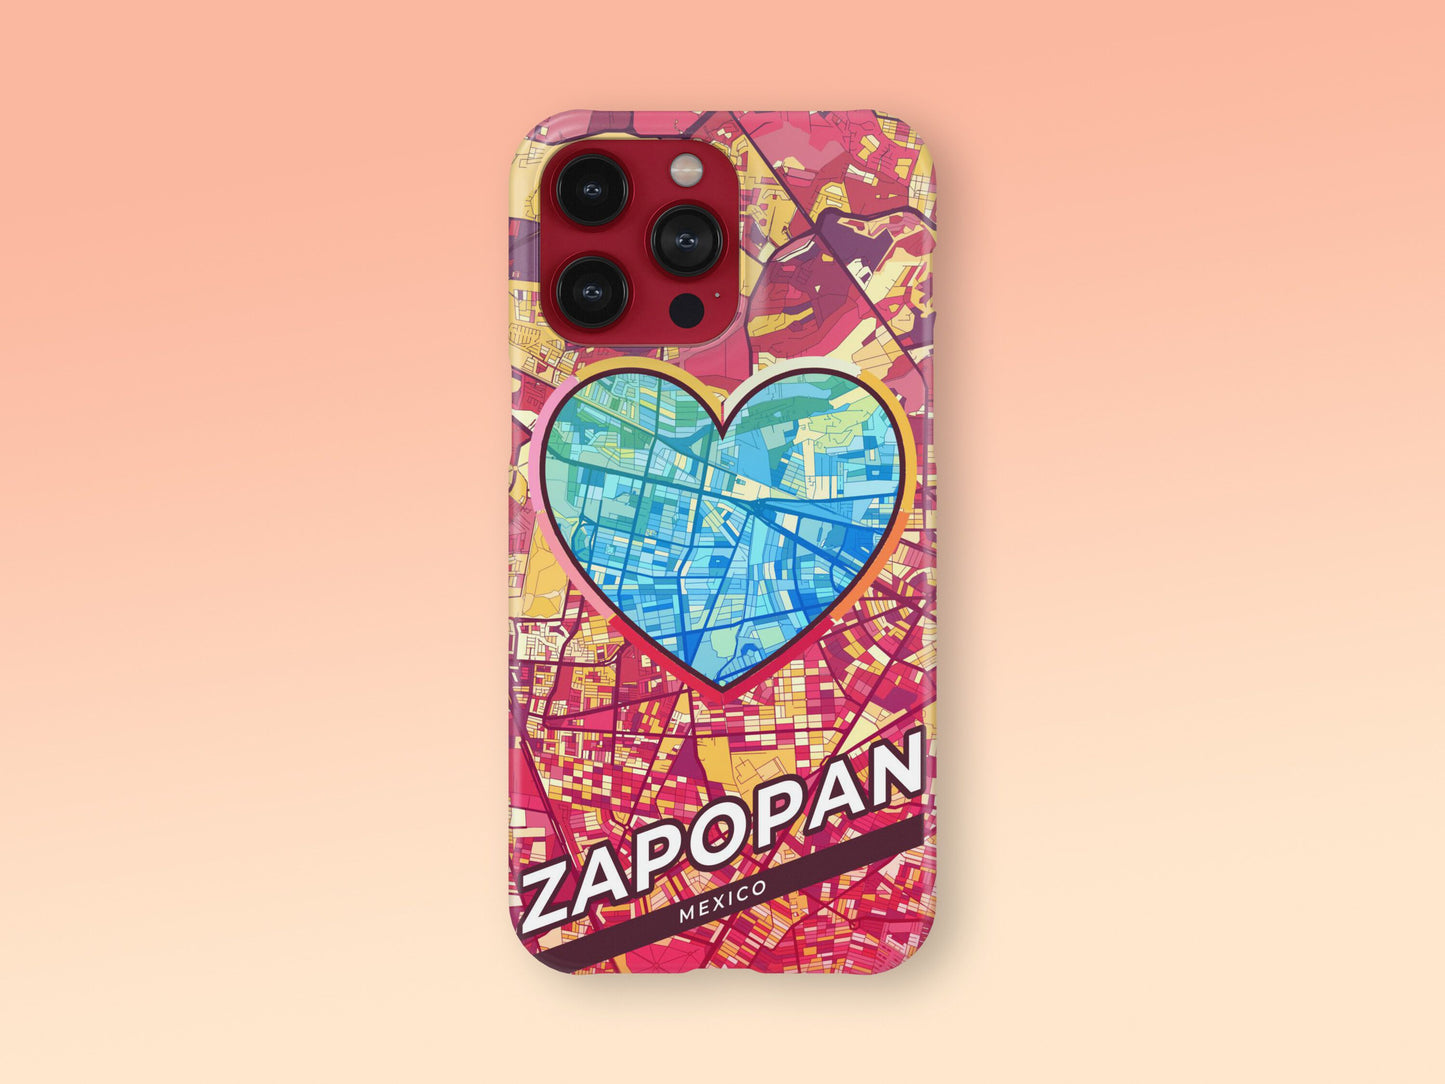 Zapopan Mexico slim phone case with colorful icon 2